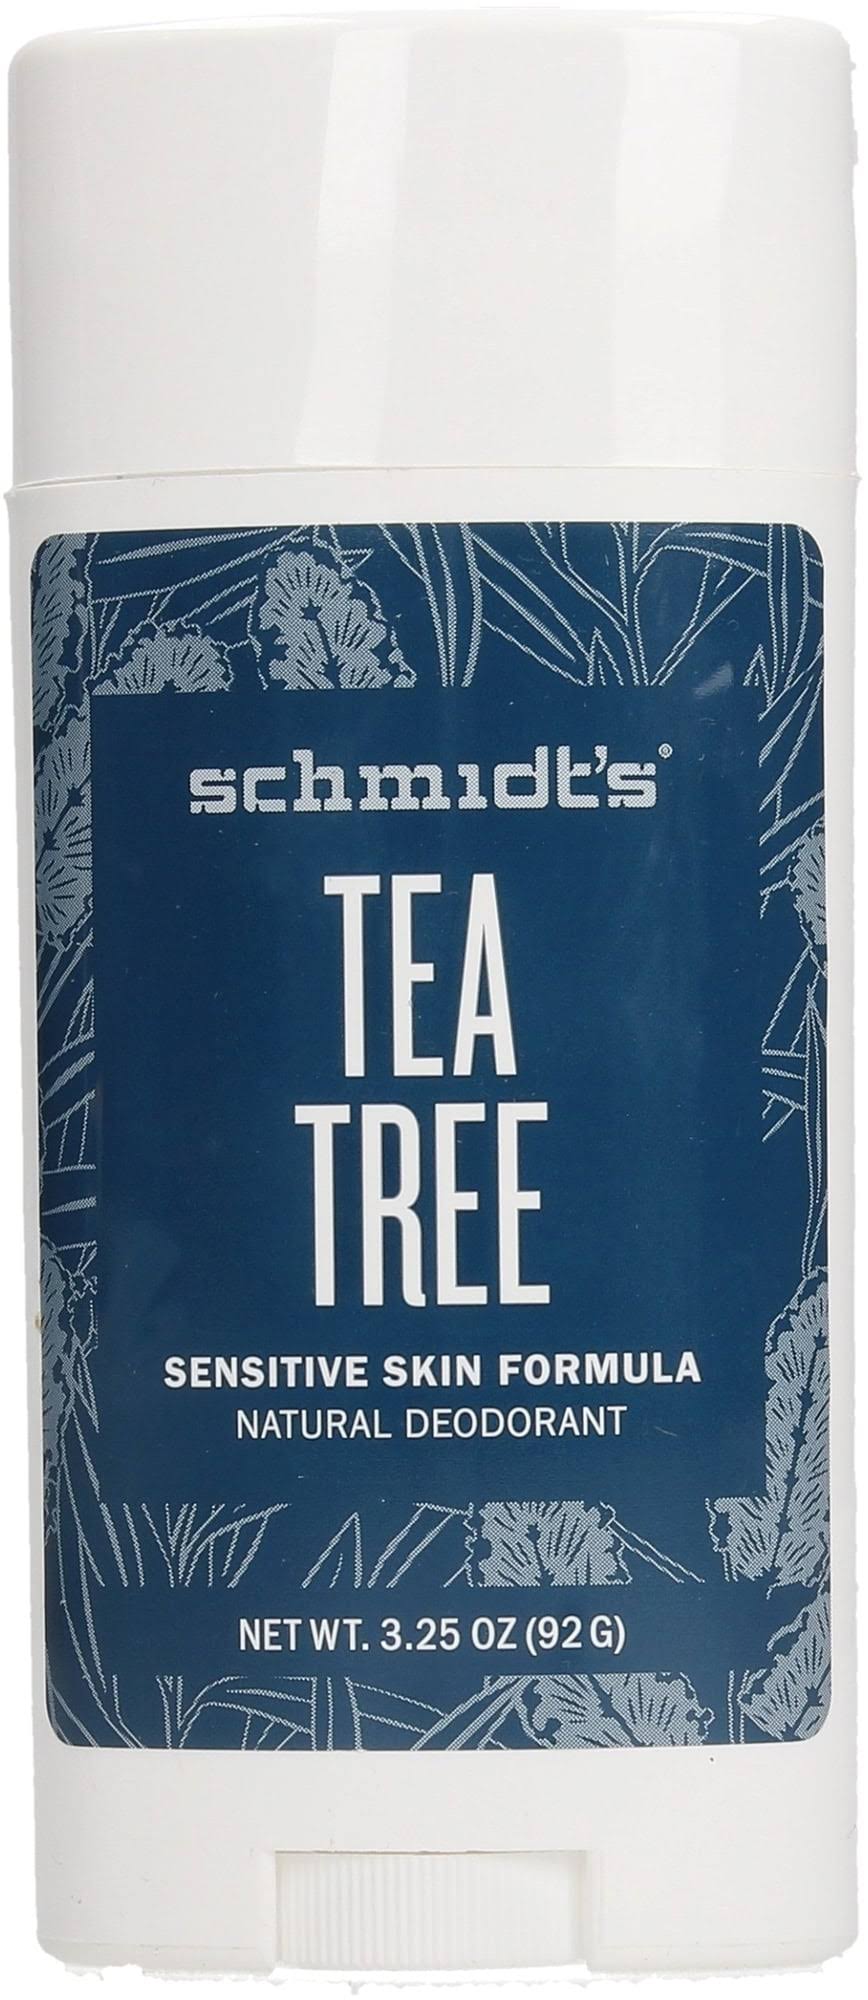 Schmidt's Natural Deodorant Stick Sensitive Skin Formula Tea Tree 3.25 oz.